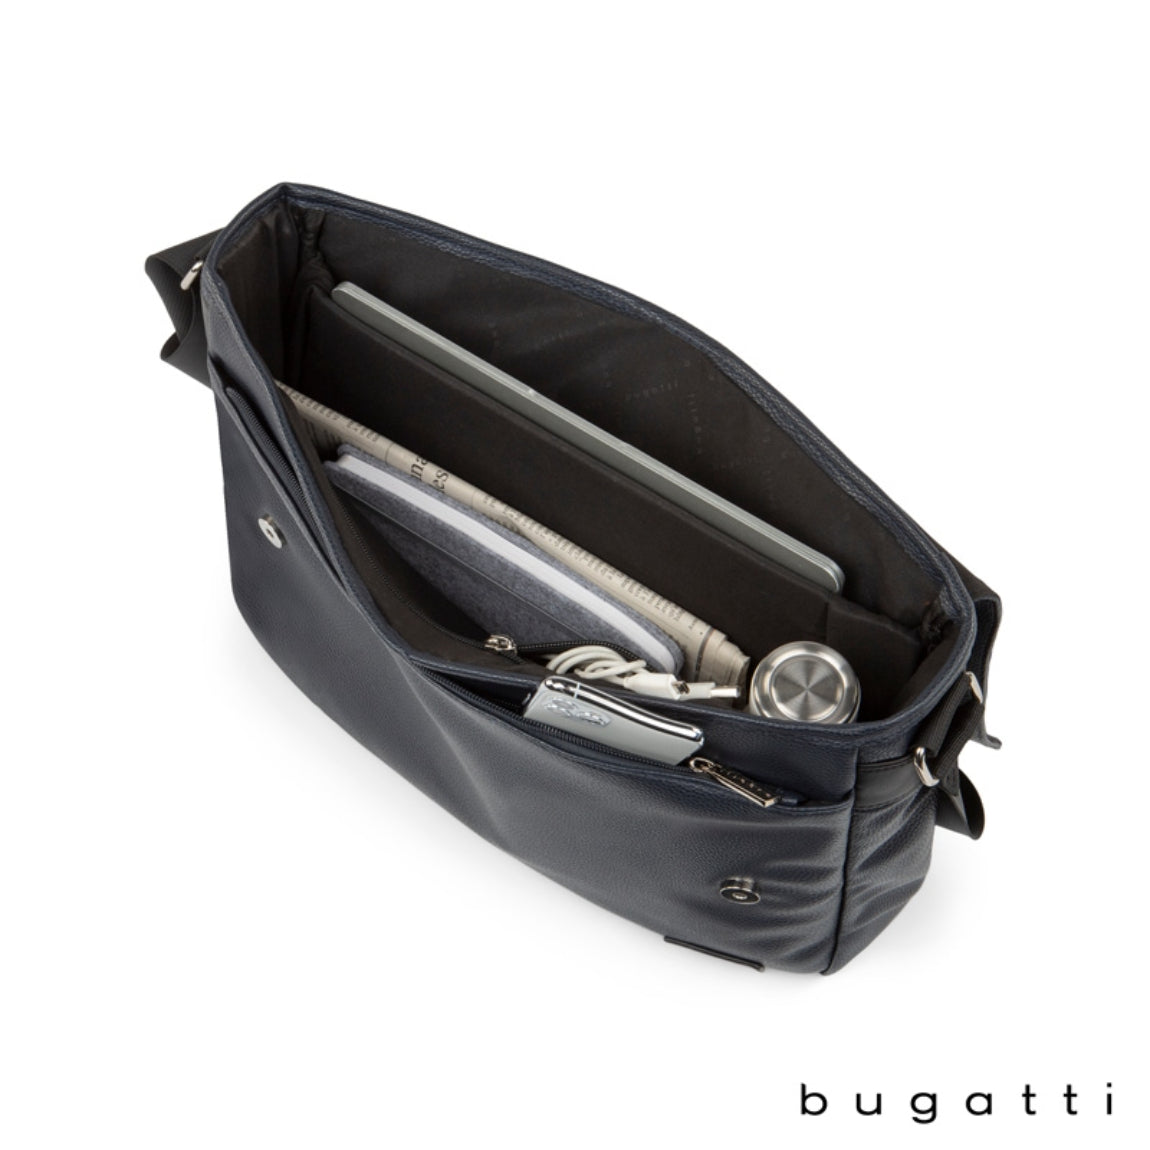 Bugatti Contrast Collection Messenger Bag